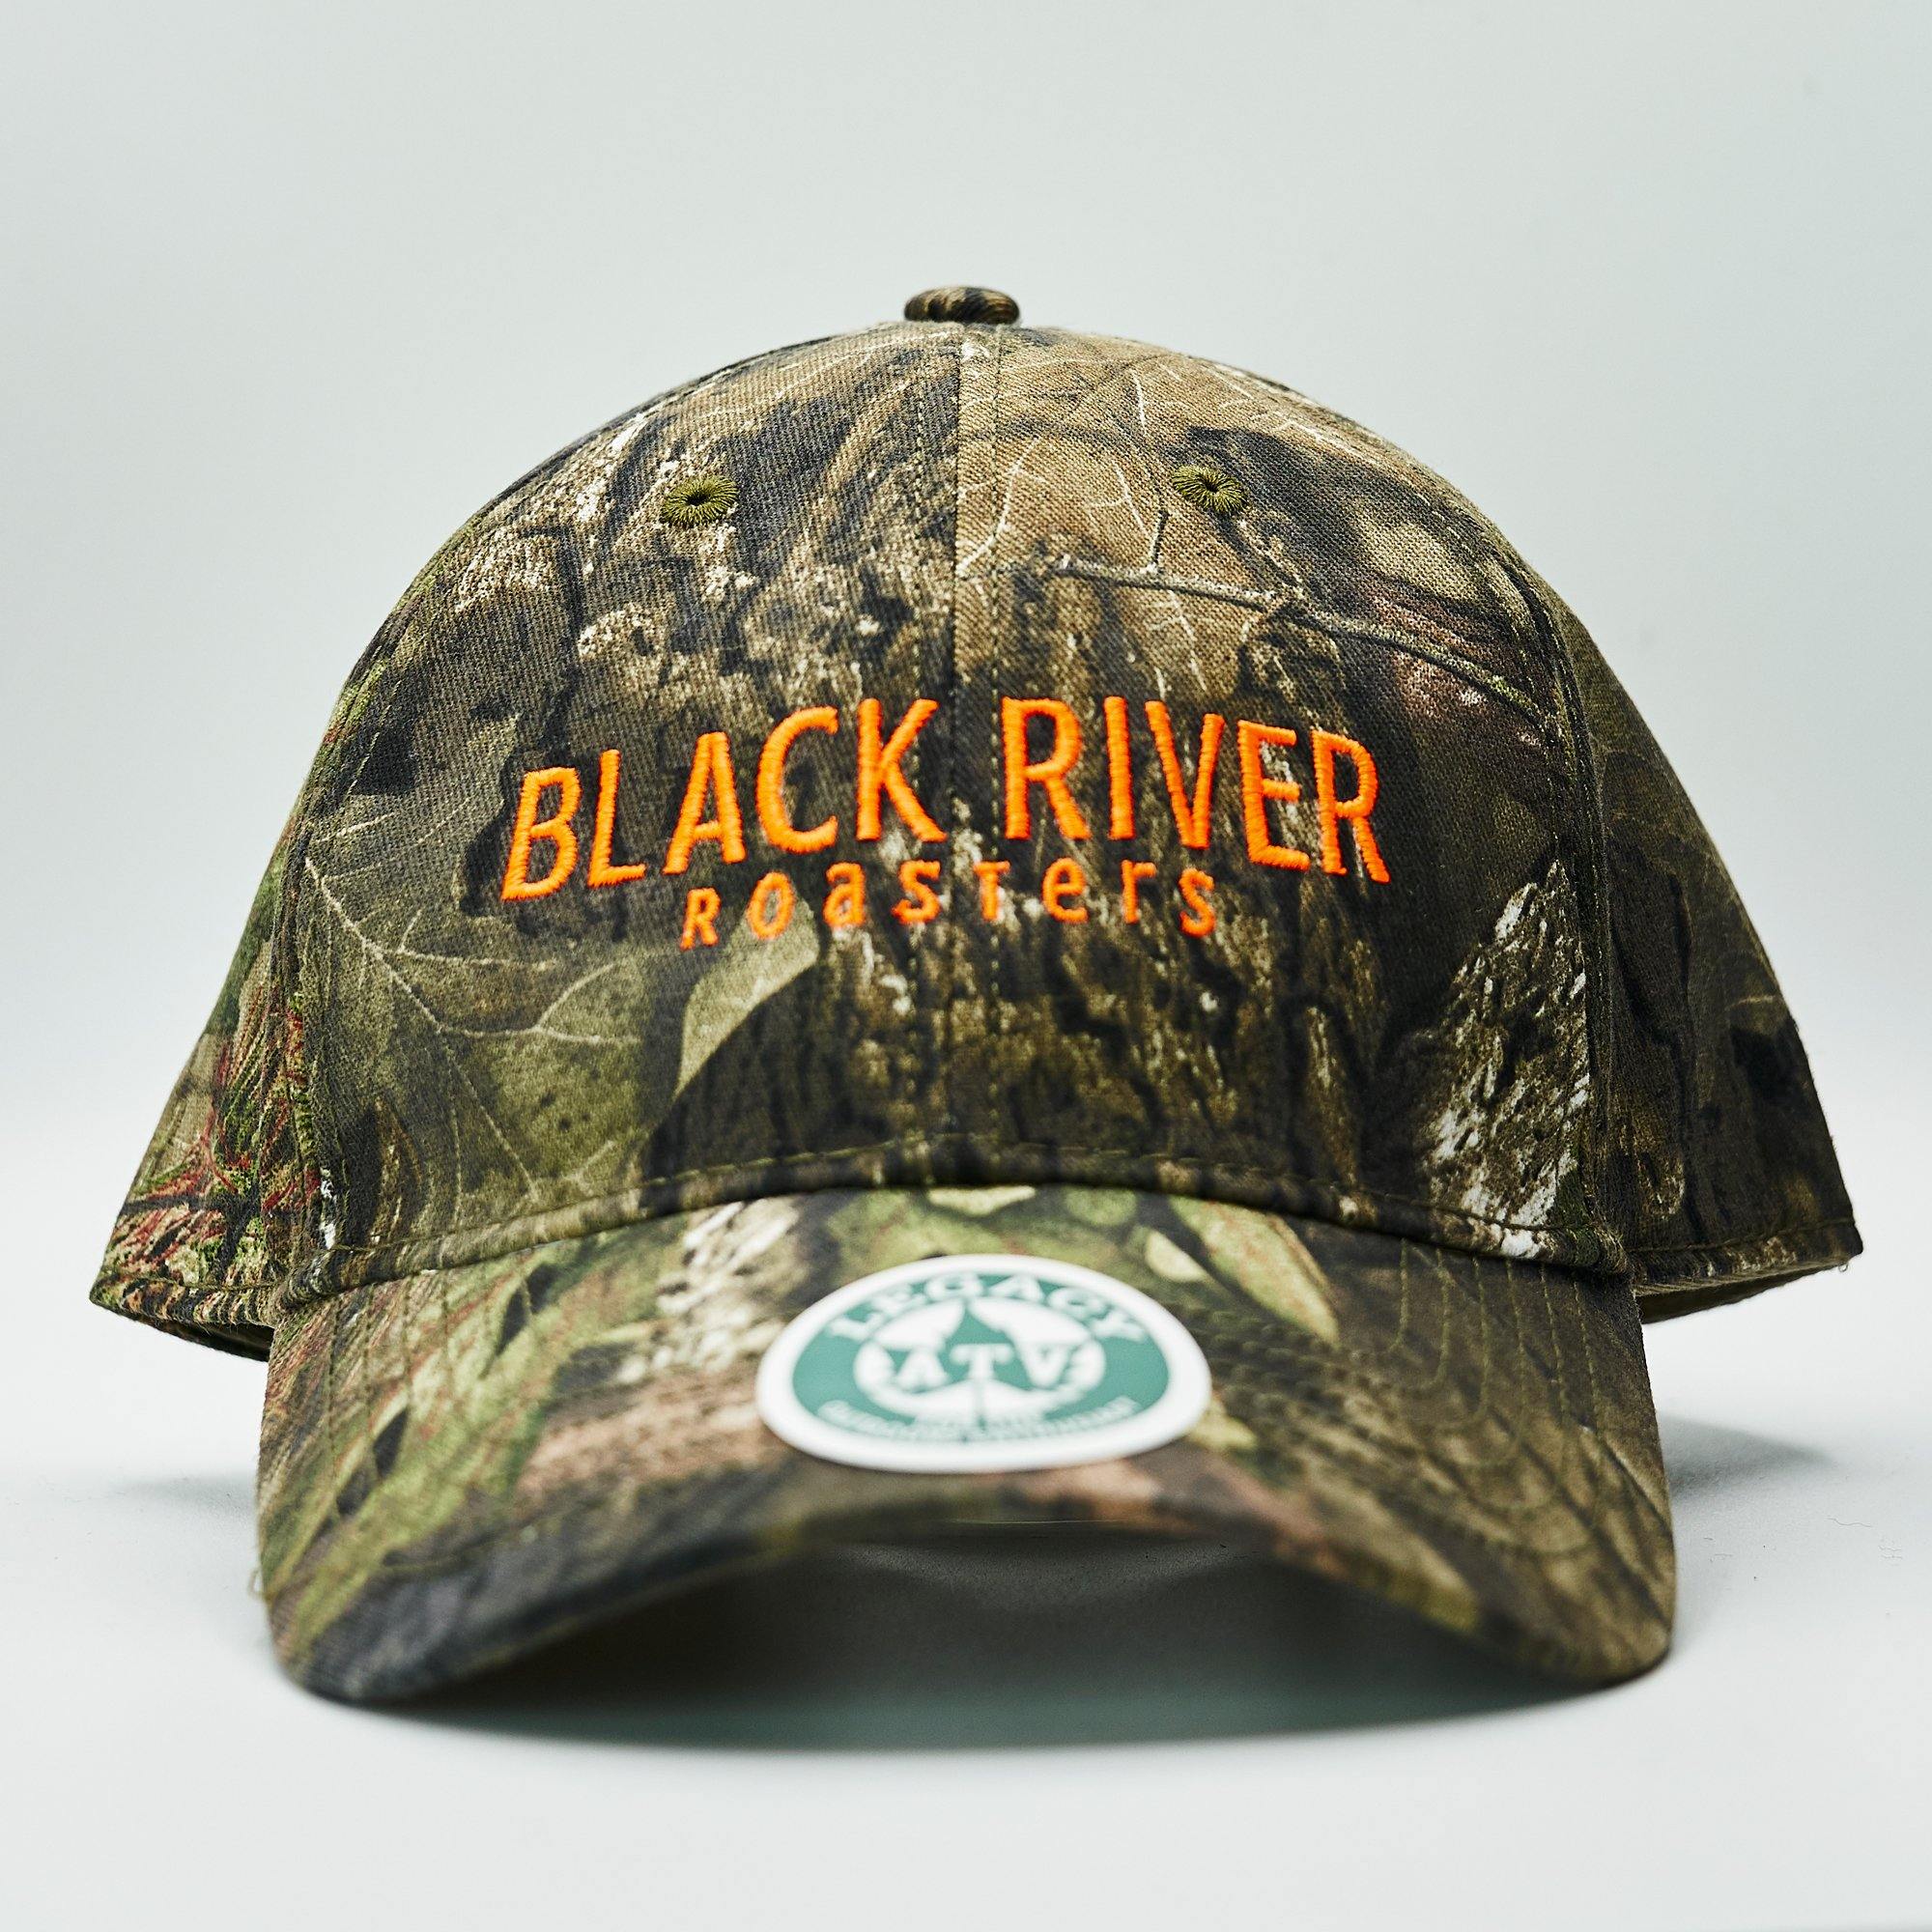 Black River Roasters Camo Hat - Black River Roasters